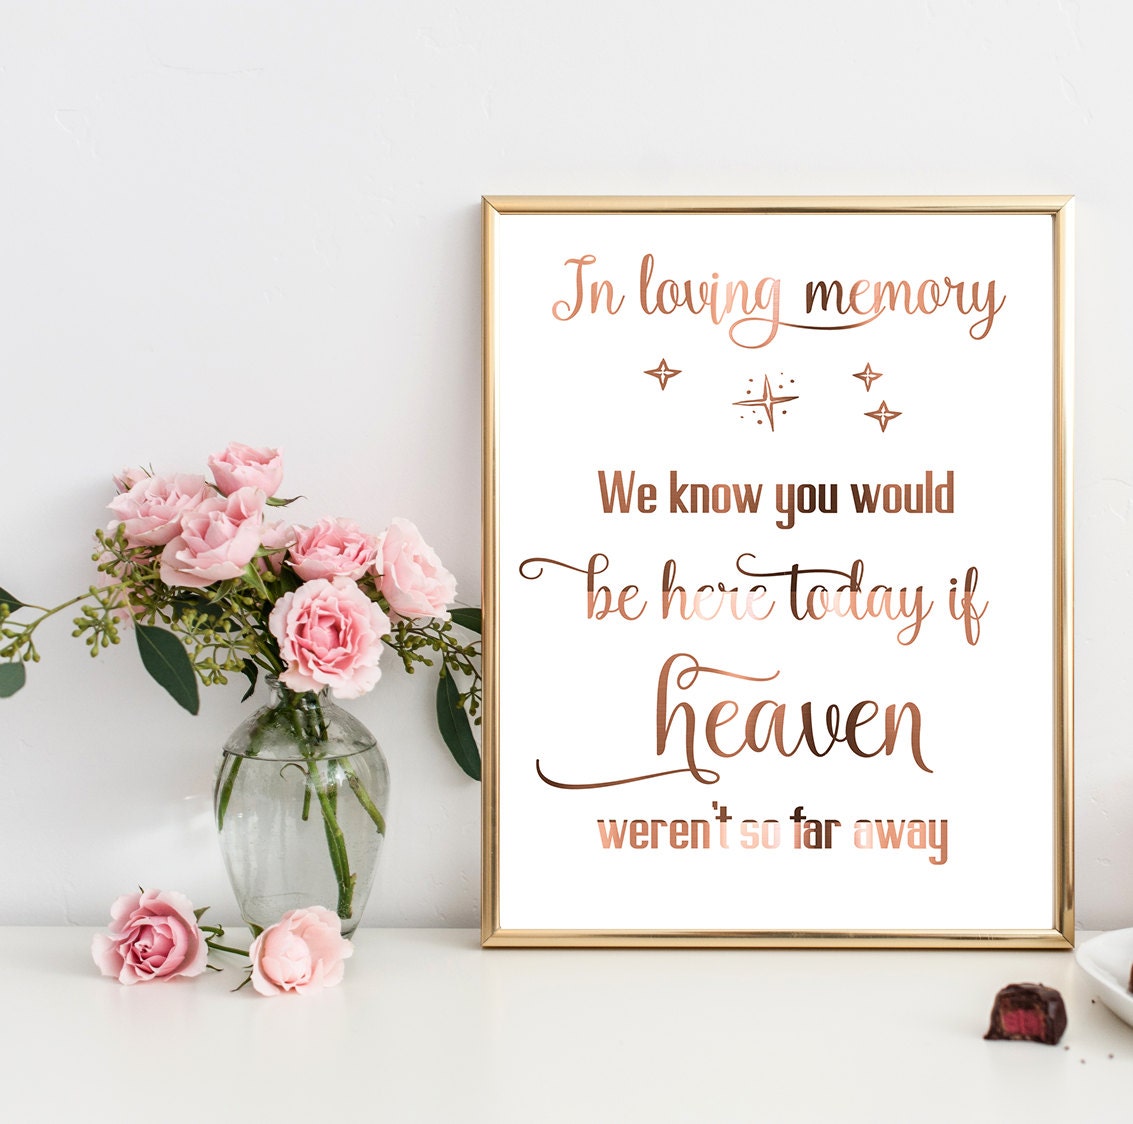 In loving memory // Heaven // wedding memory // weddings // copper // feather // 